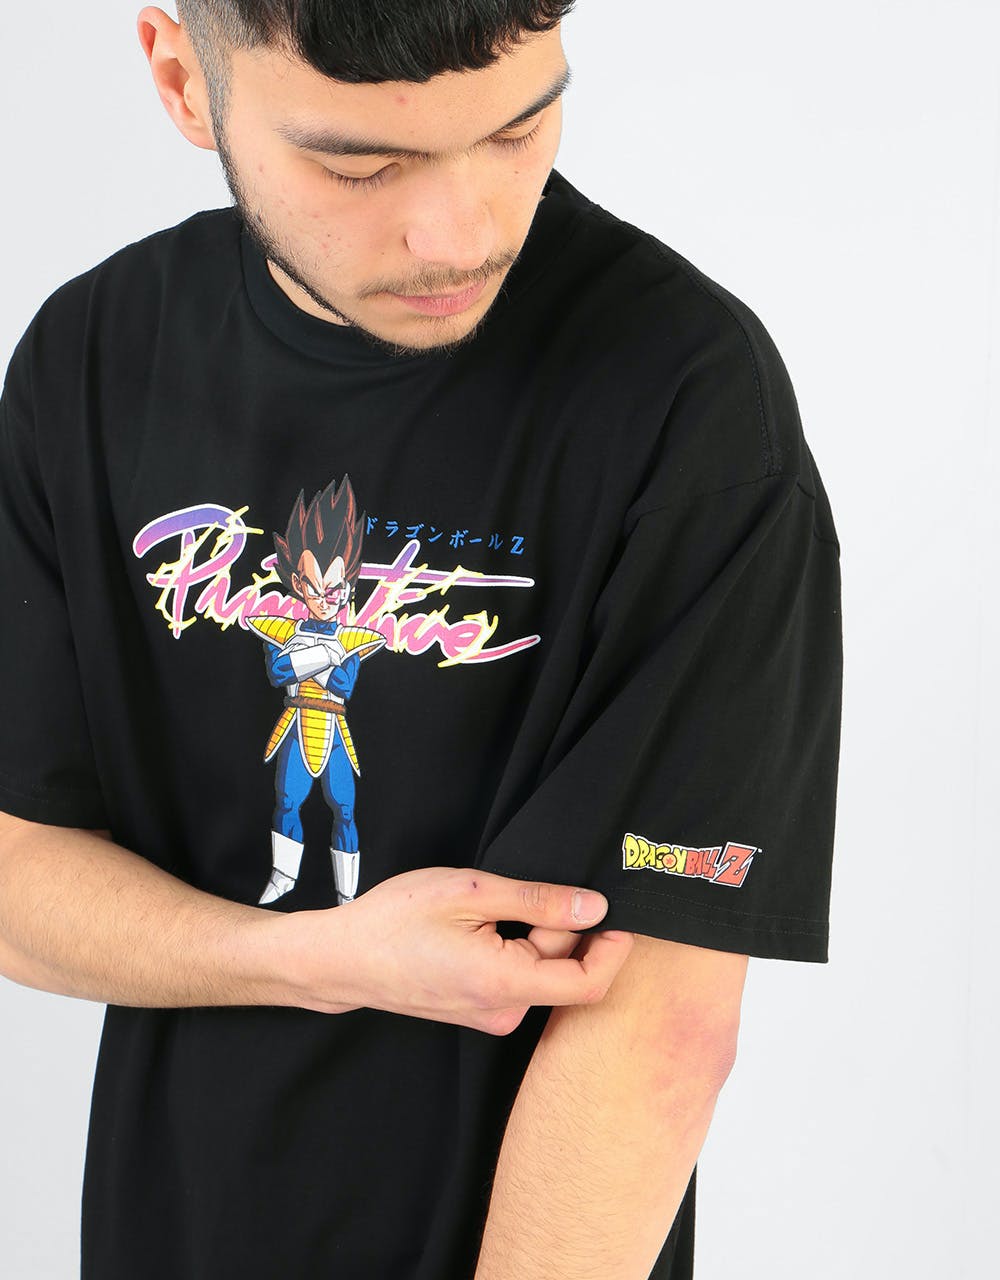 Primitive x Dragon Ball Z Nuevo Vegeta T-Shirt - Black